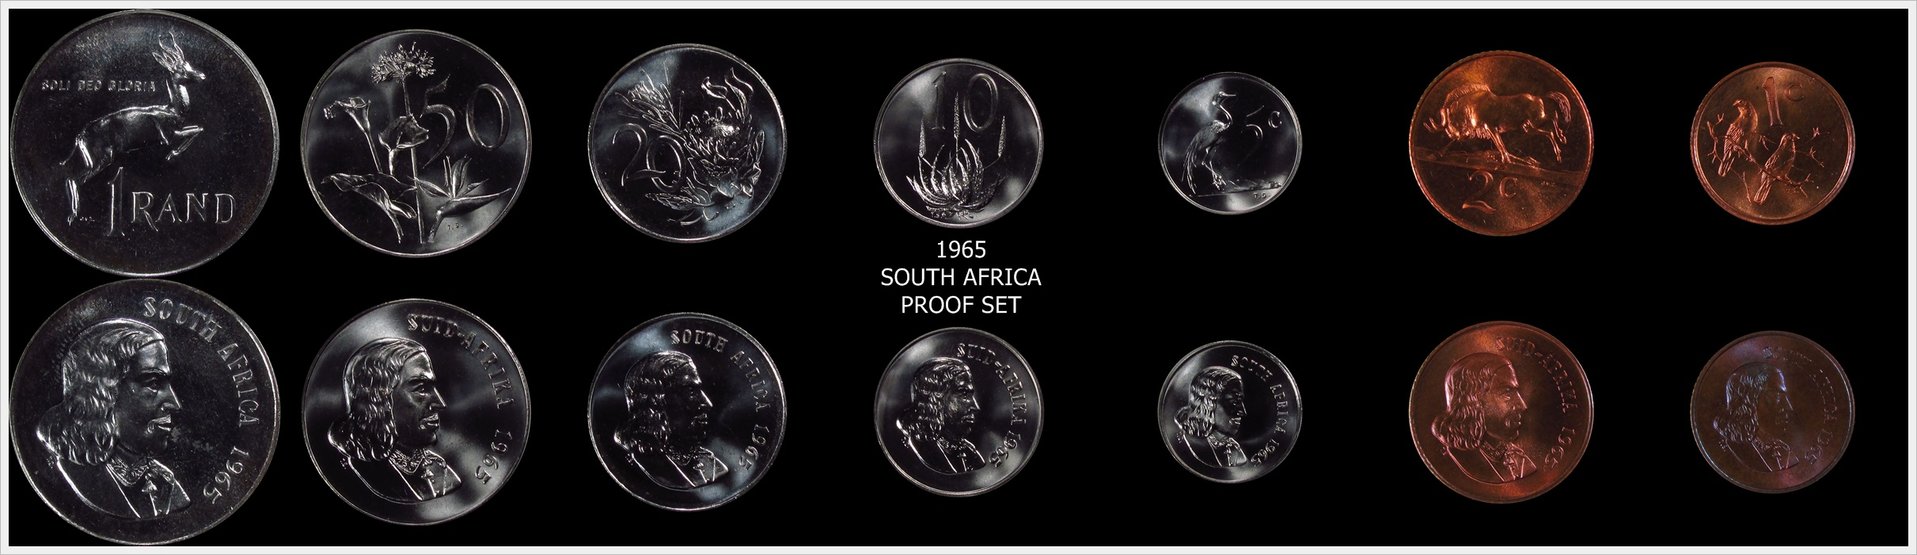 1965 South Africa proof Set.jpg